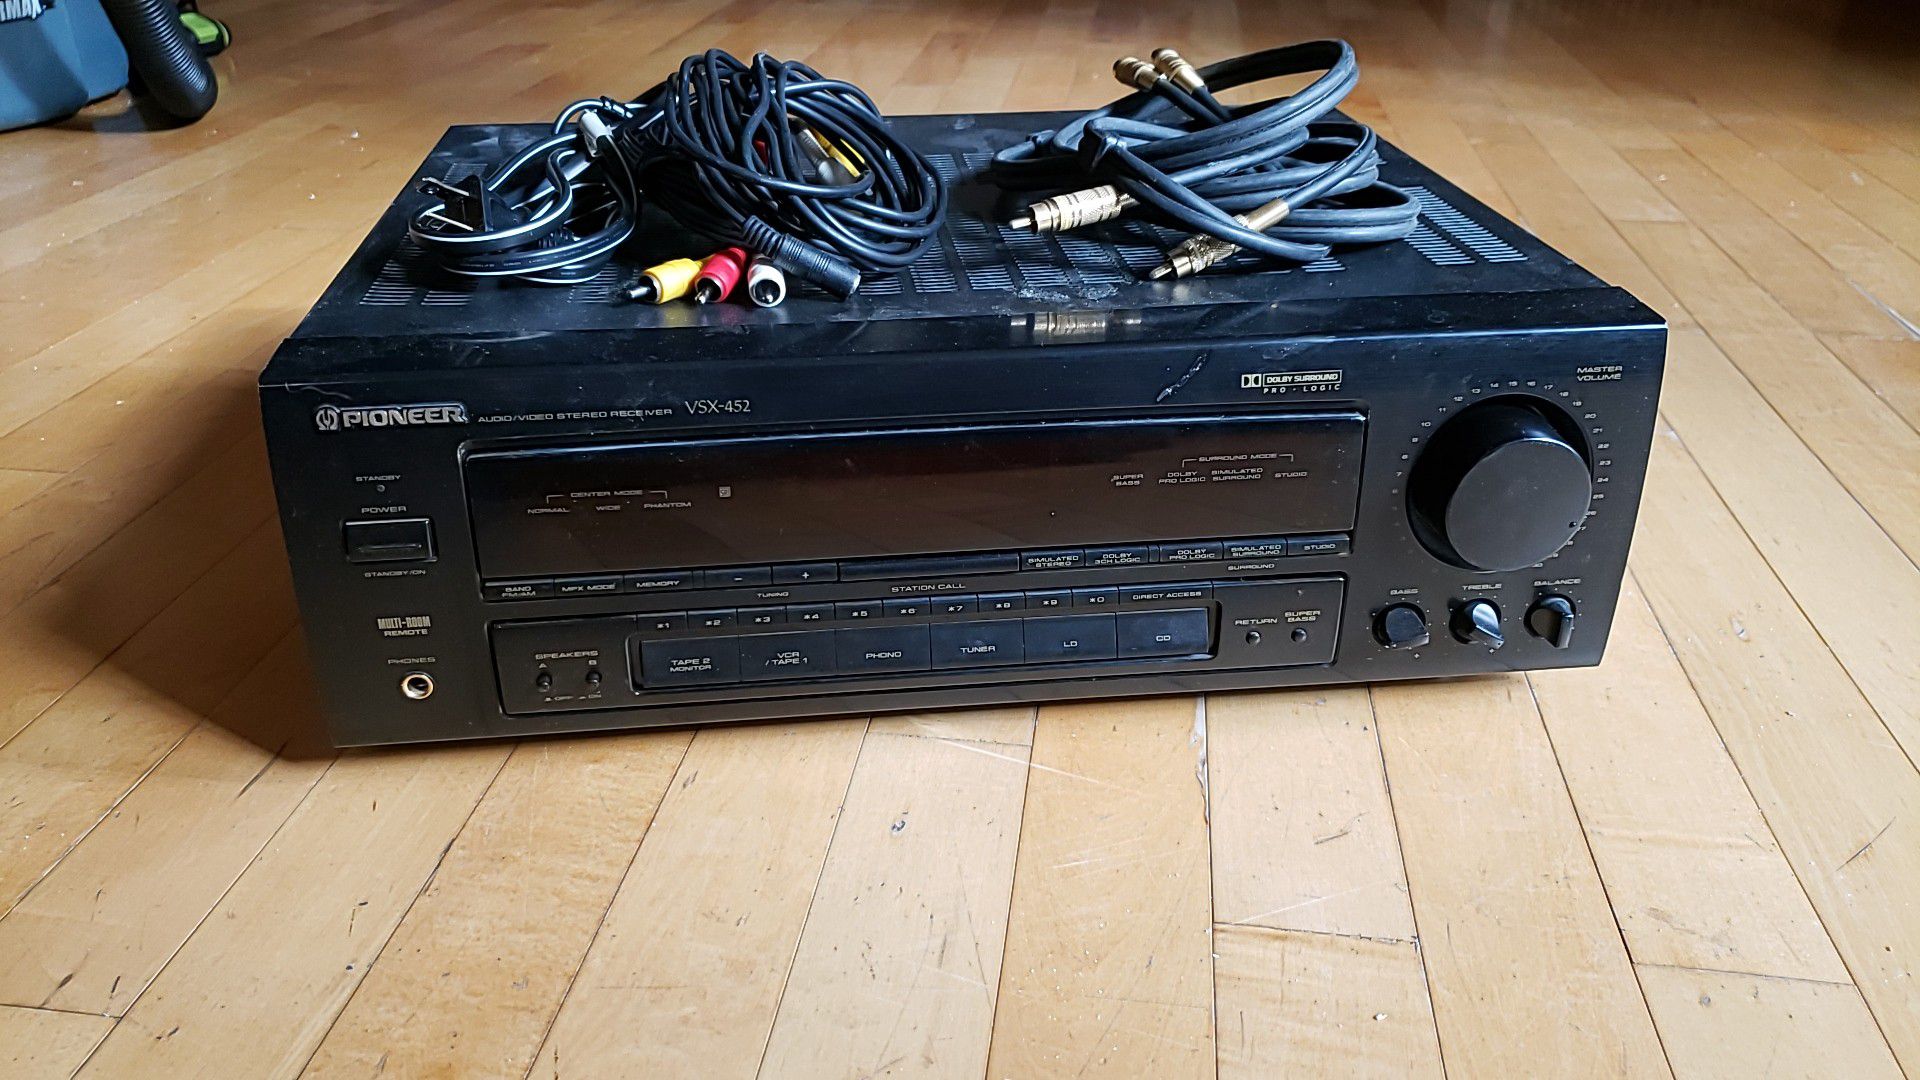 Pioneer VSX 452 stereo receiver amplifier